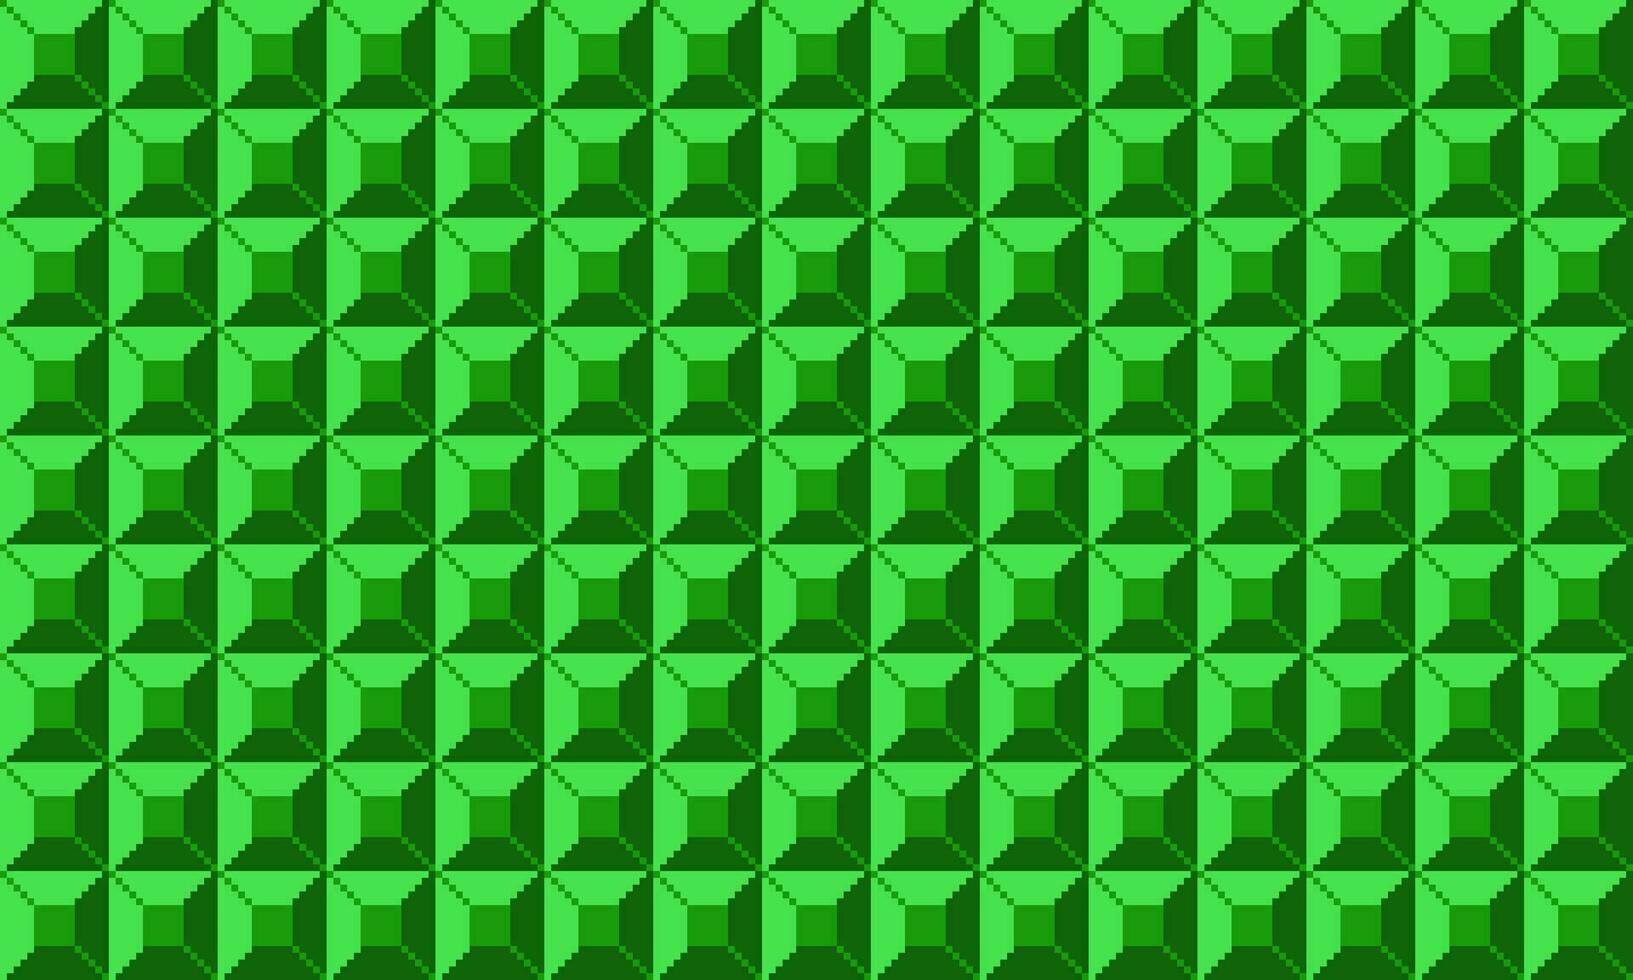 Pixel 8 bit game background. Vector illustration. Pixel art.